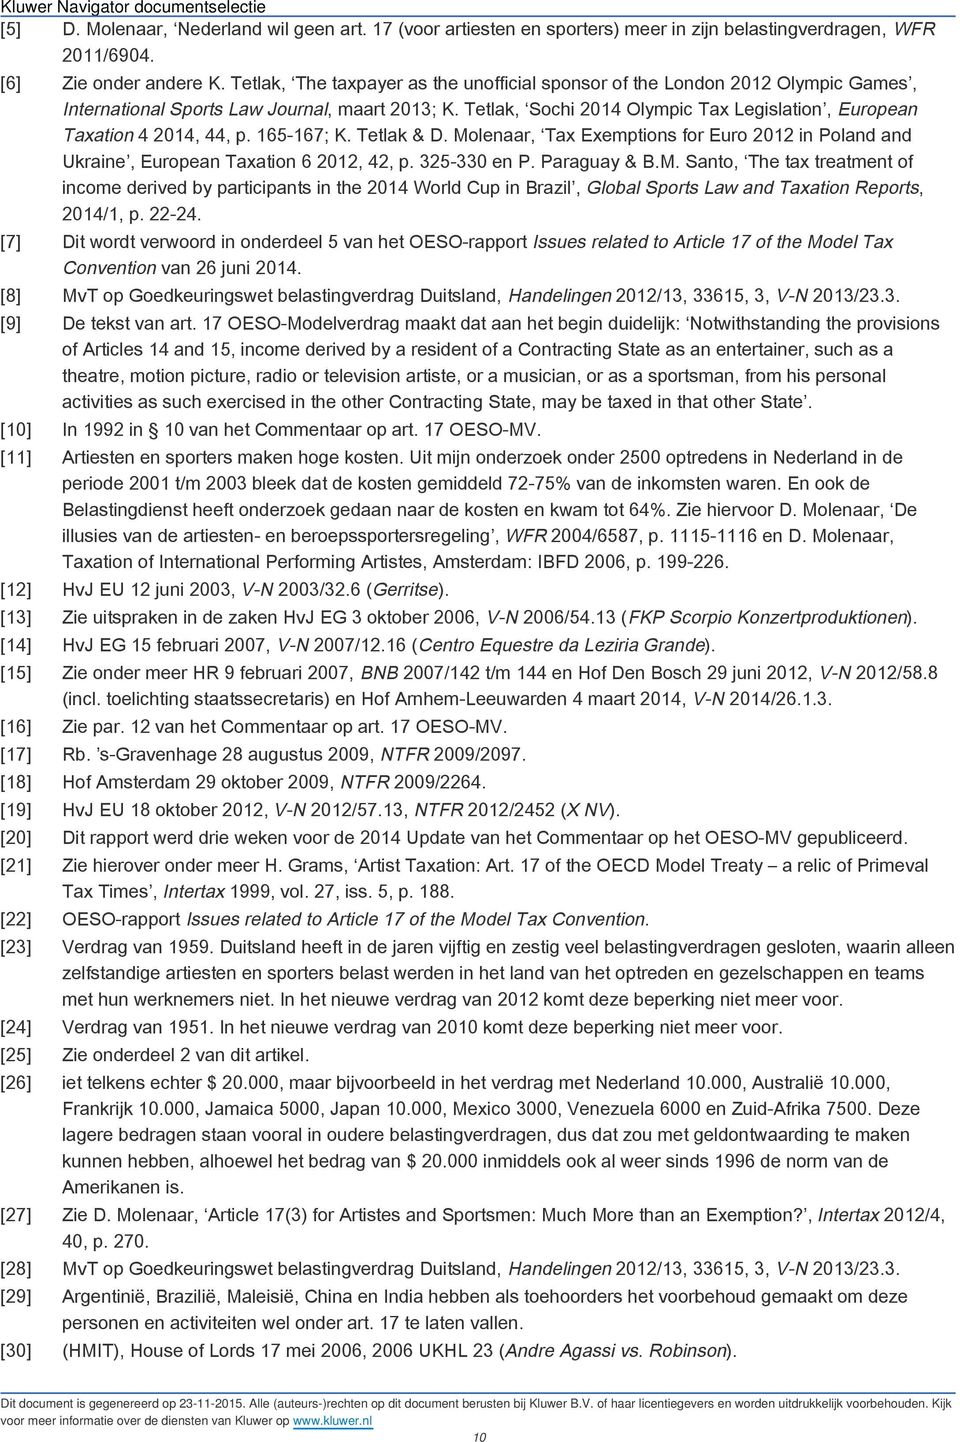 Tetlak, Sochi 2014 Olympic Tax Legislation, European Taxation 4 2014, 44, p. 165-167; K. Tetlak & D. Molenaar, Tax Exemptions for Euro 2012 in Poland and Ukraine, European Taxation 6 2012, 42, p.